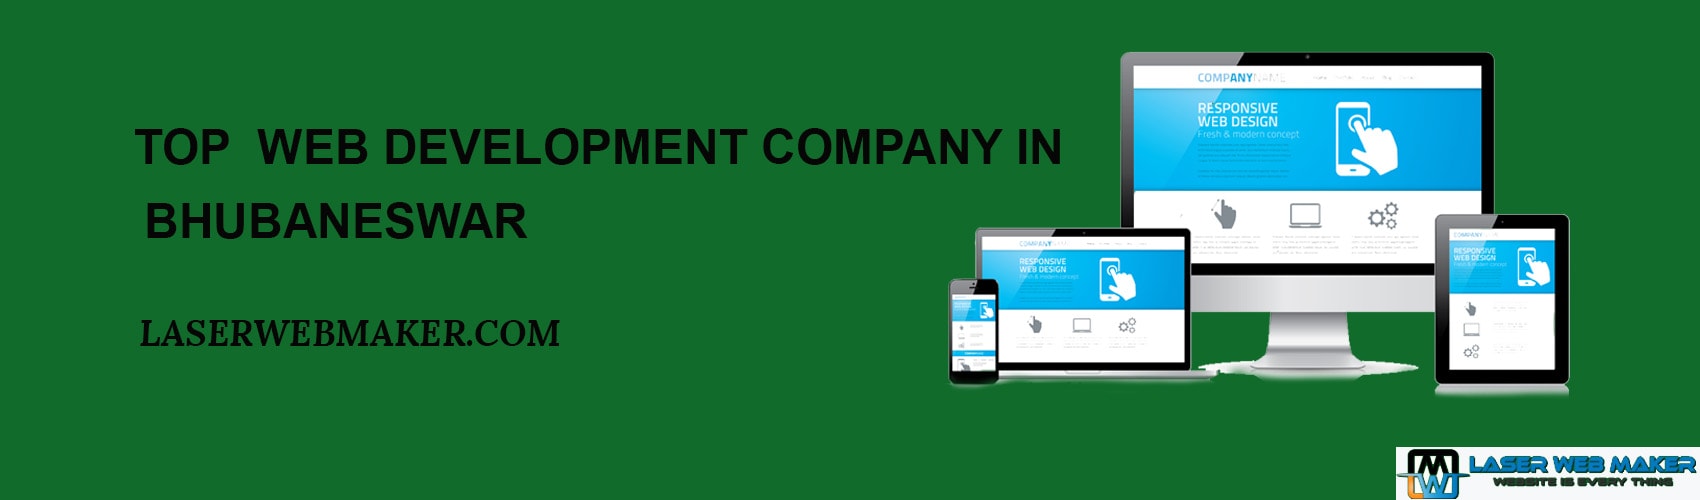 Top Web Development Company In Bhubaneswar